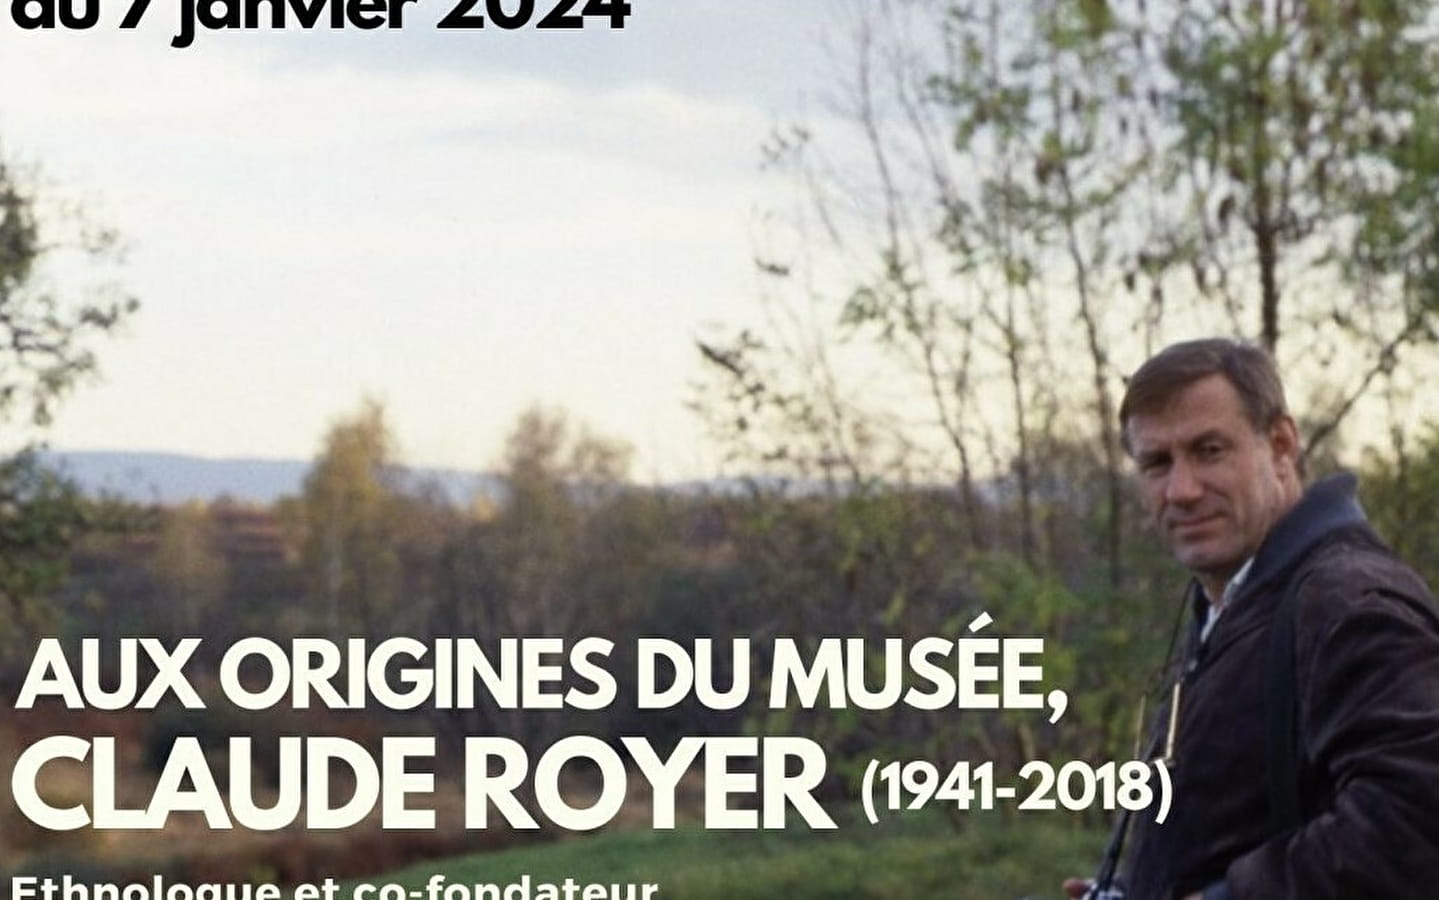 The origins of the museum: Claude Royer 